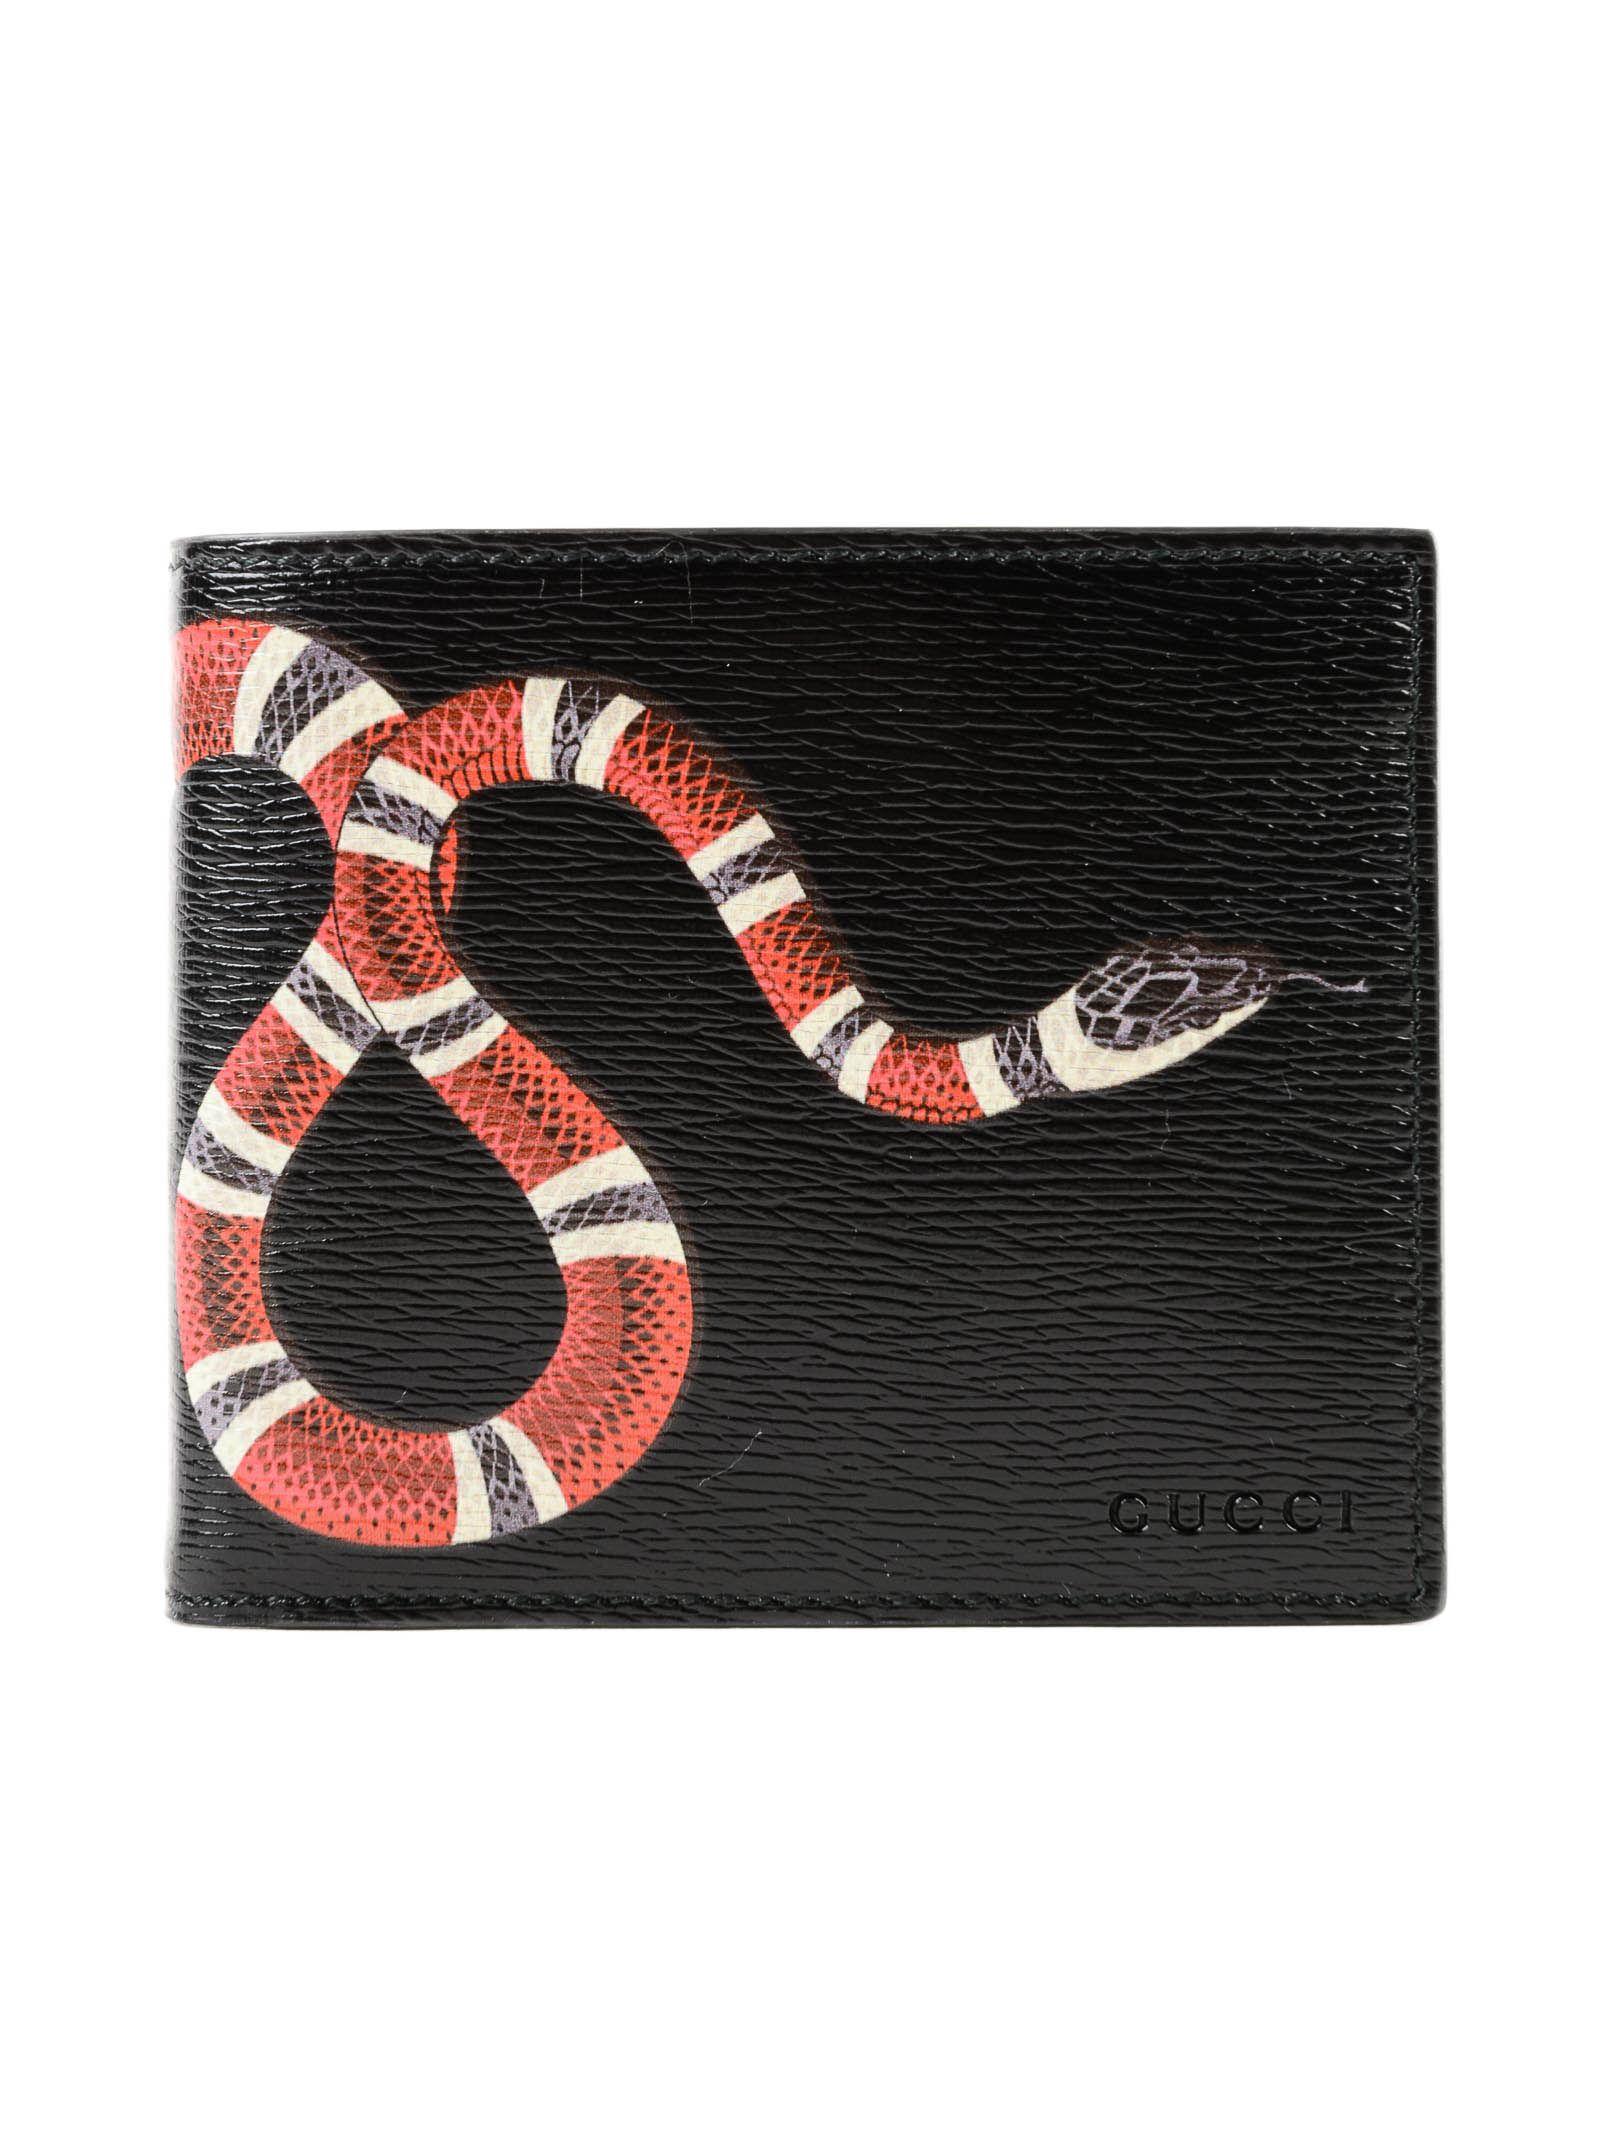 Coral Snake Gucci Logo - Gucci Shangai Calf Coral Snake Wallet 451268/DUR1T - 1058 BLACK ...